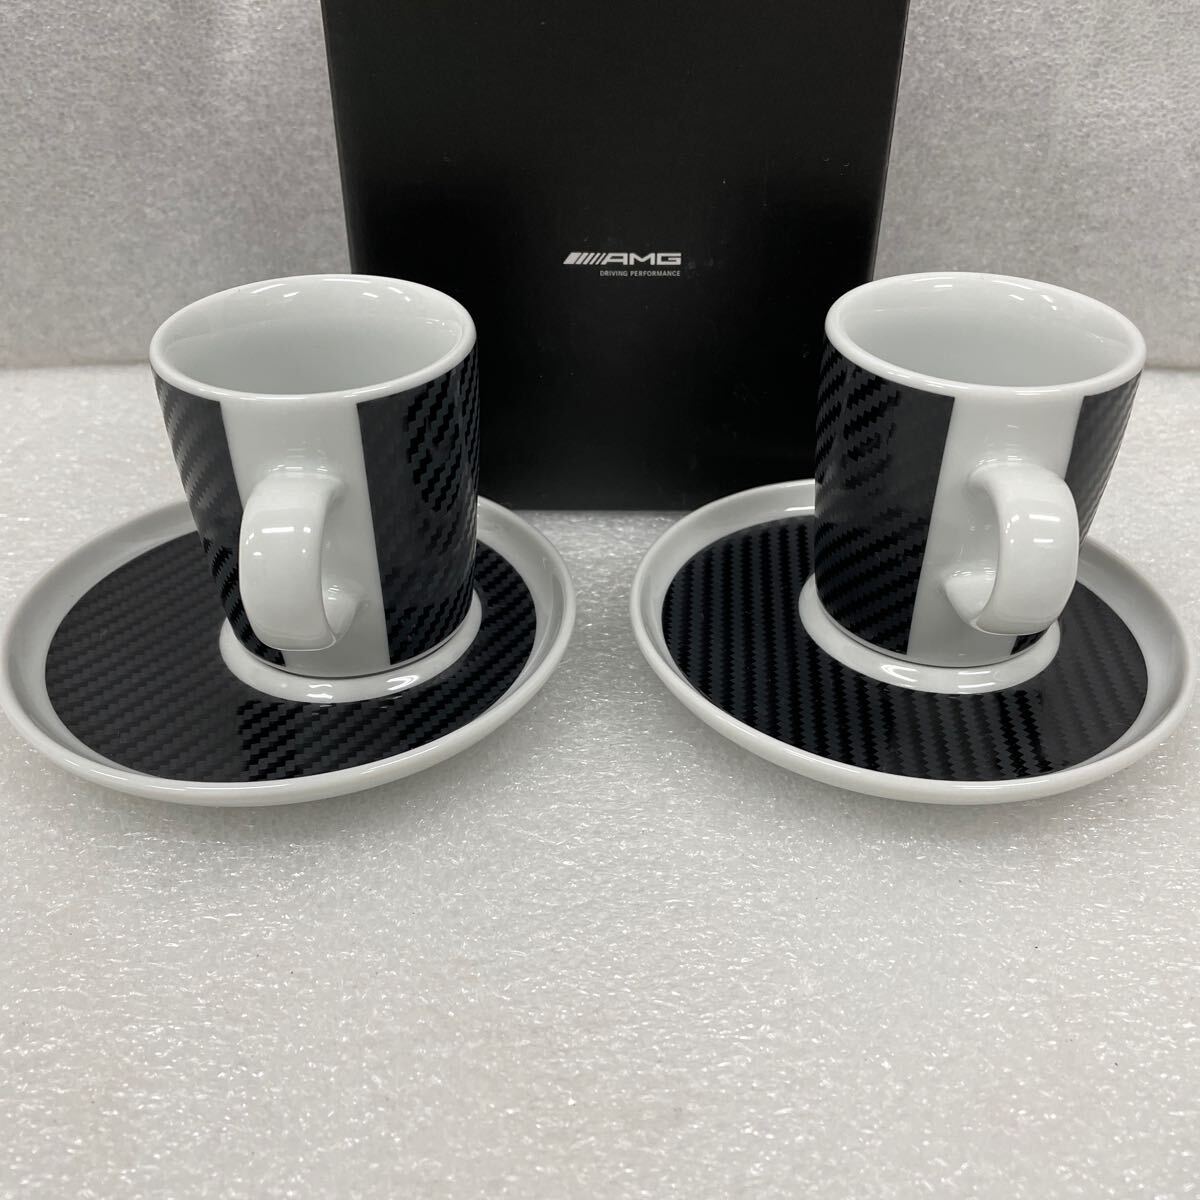  Mercedes Benz AMG regular goods KAHLA made Espresso cup set saucer 